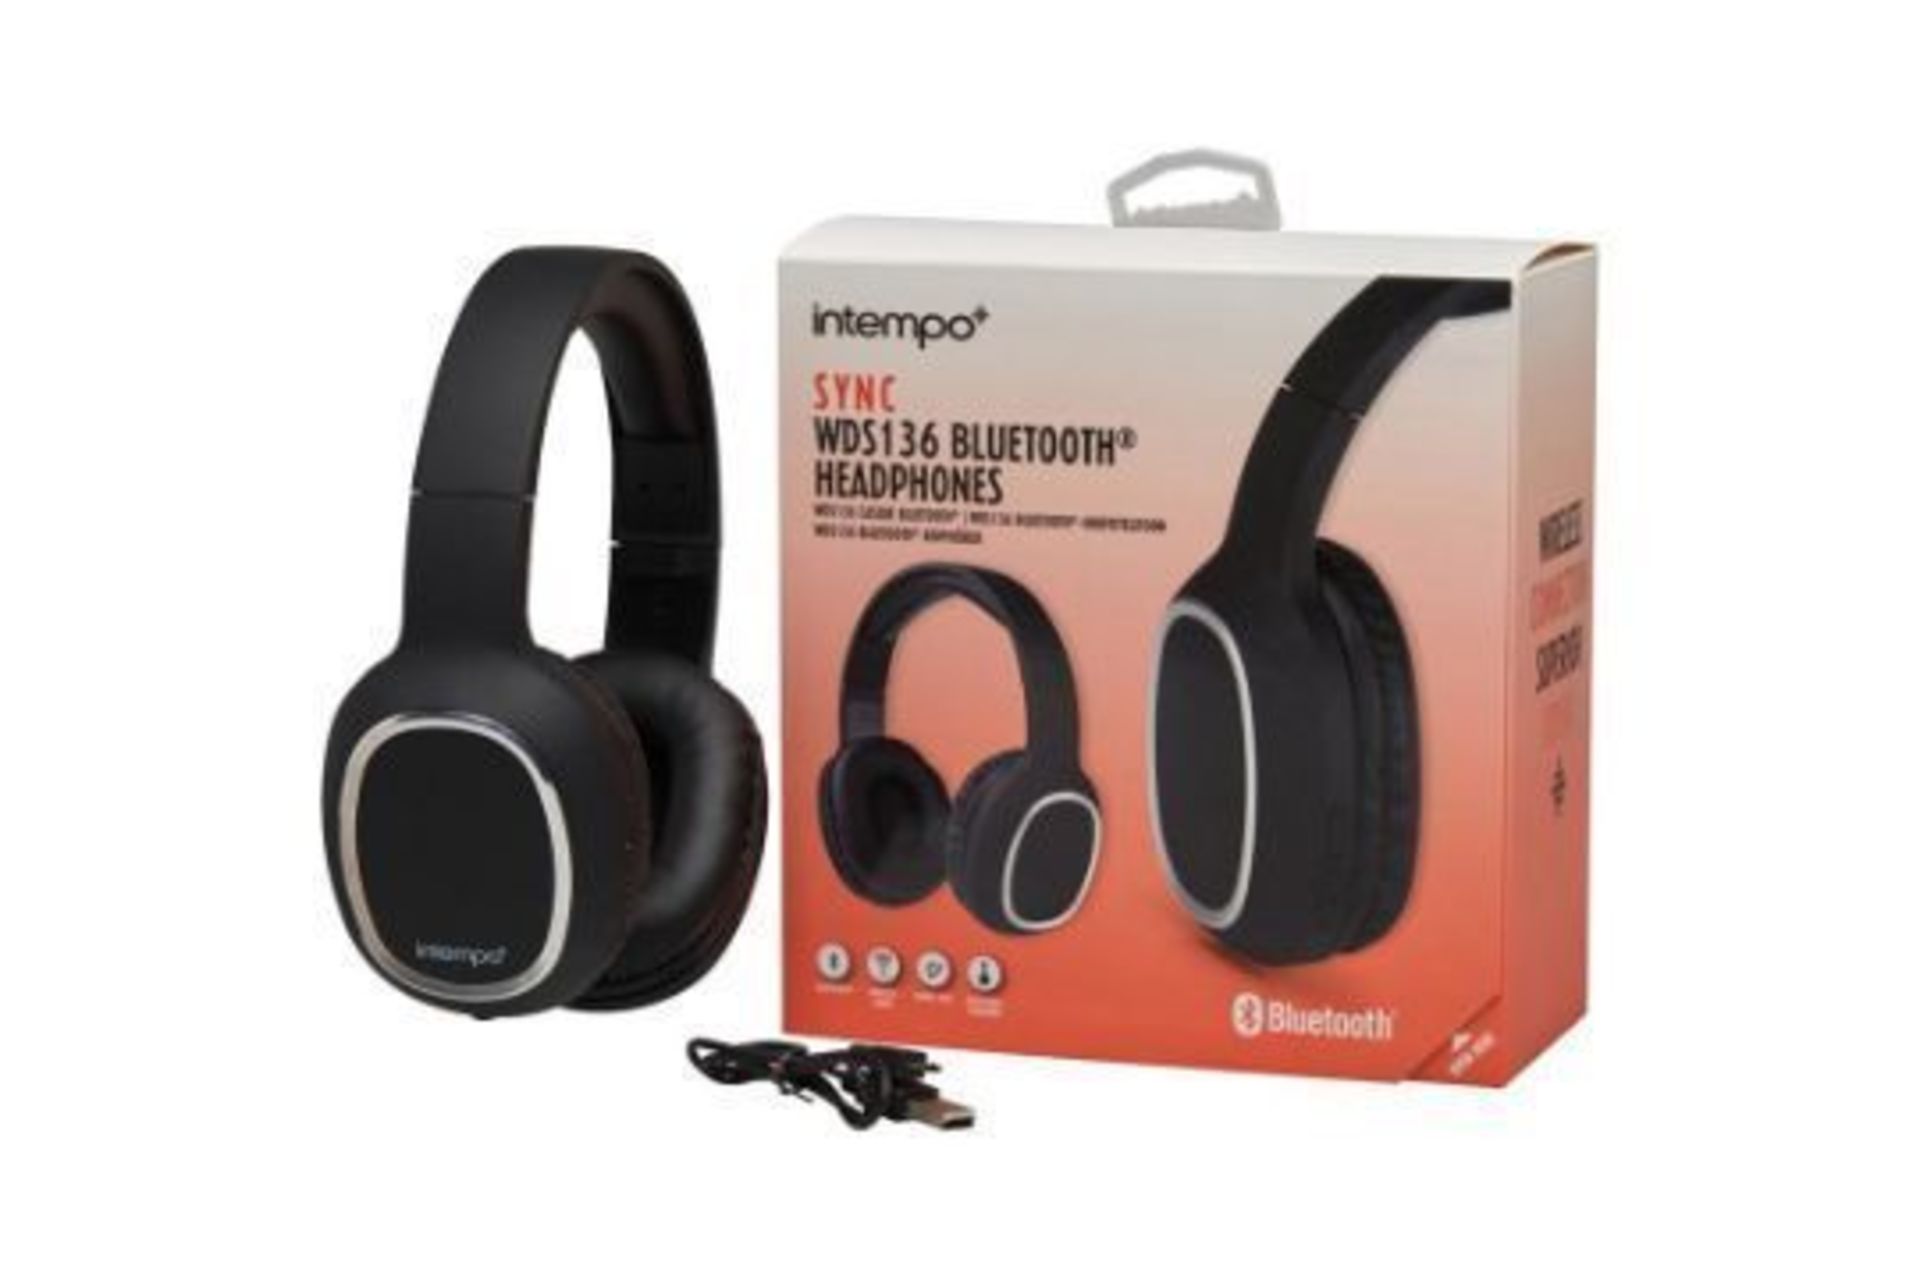 Brand New Intempo WDS136 Wireless Bluetooth Headphones